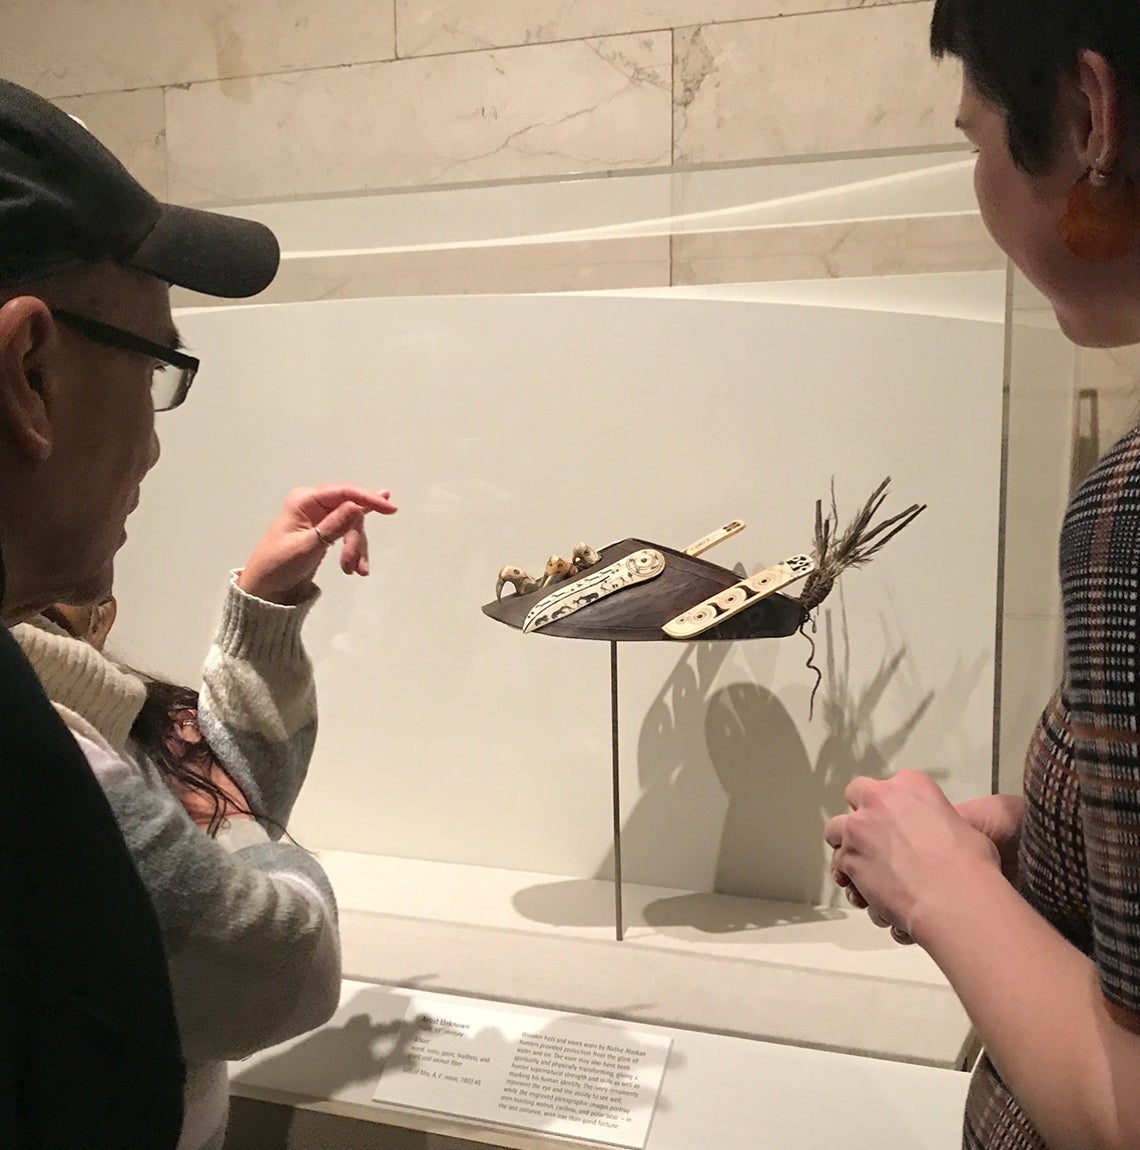 People view Native American visor as artifact in museum.